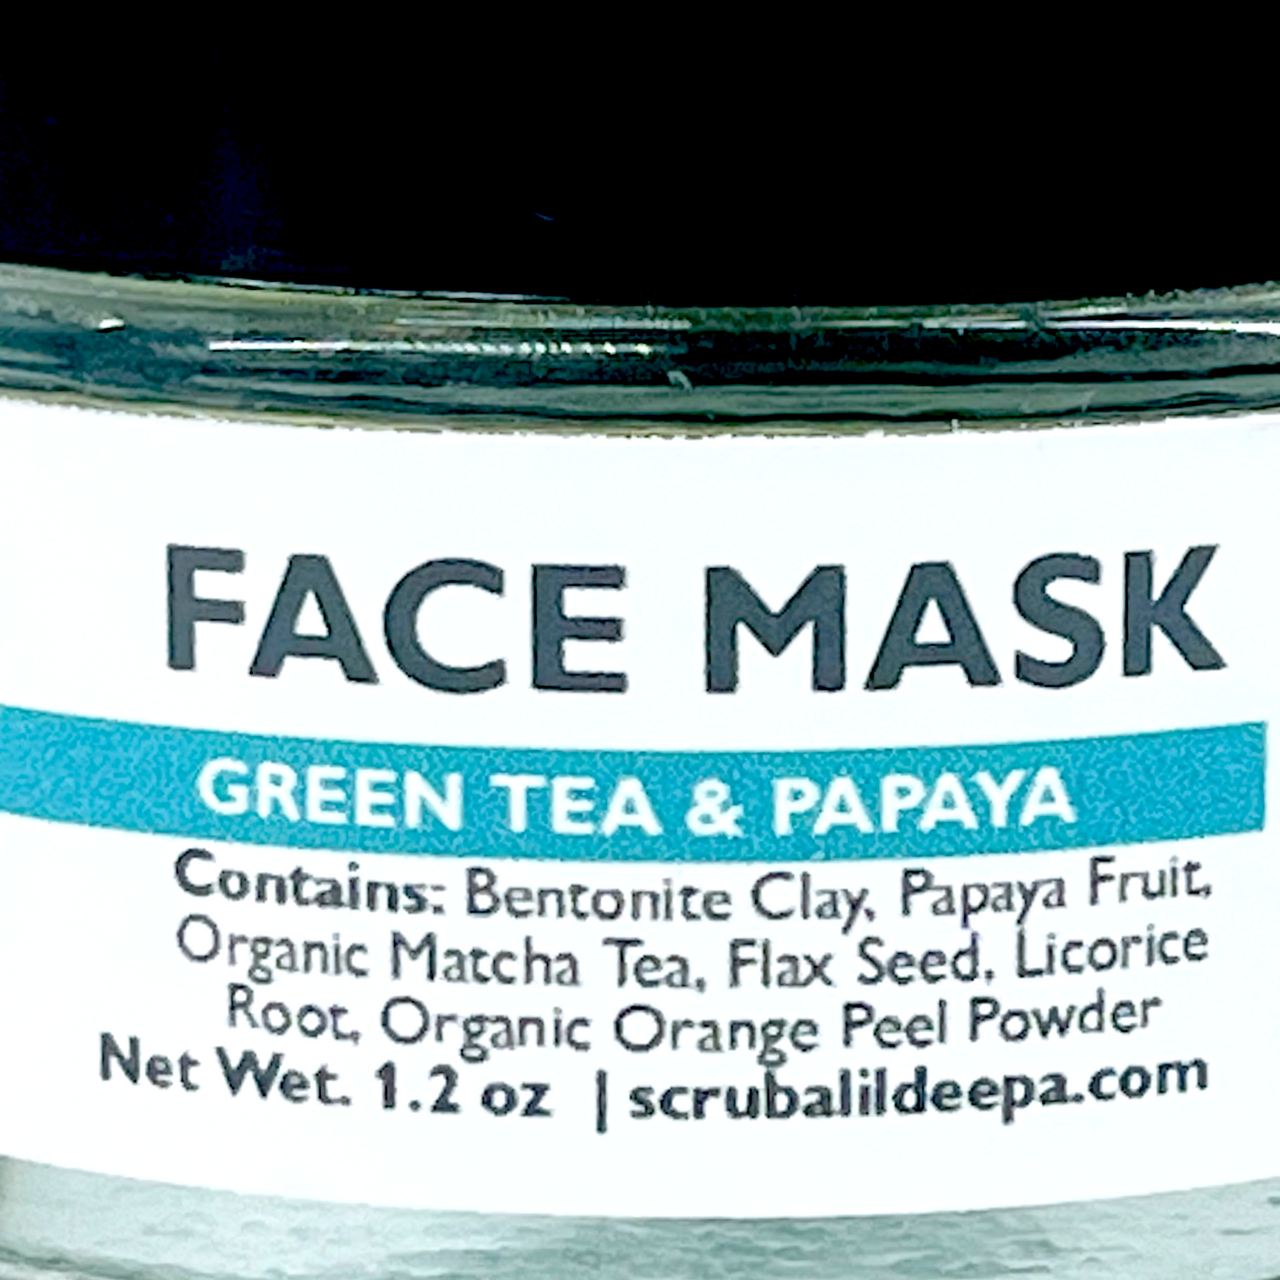 Matcha and Papaya Facial Mask